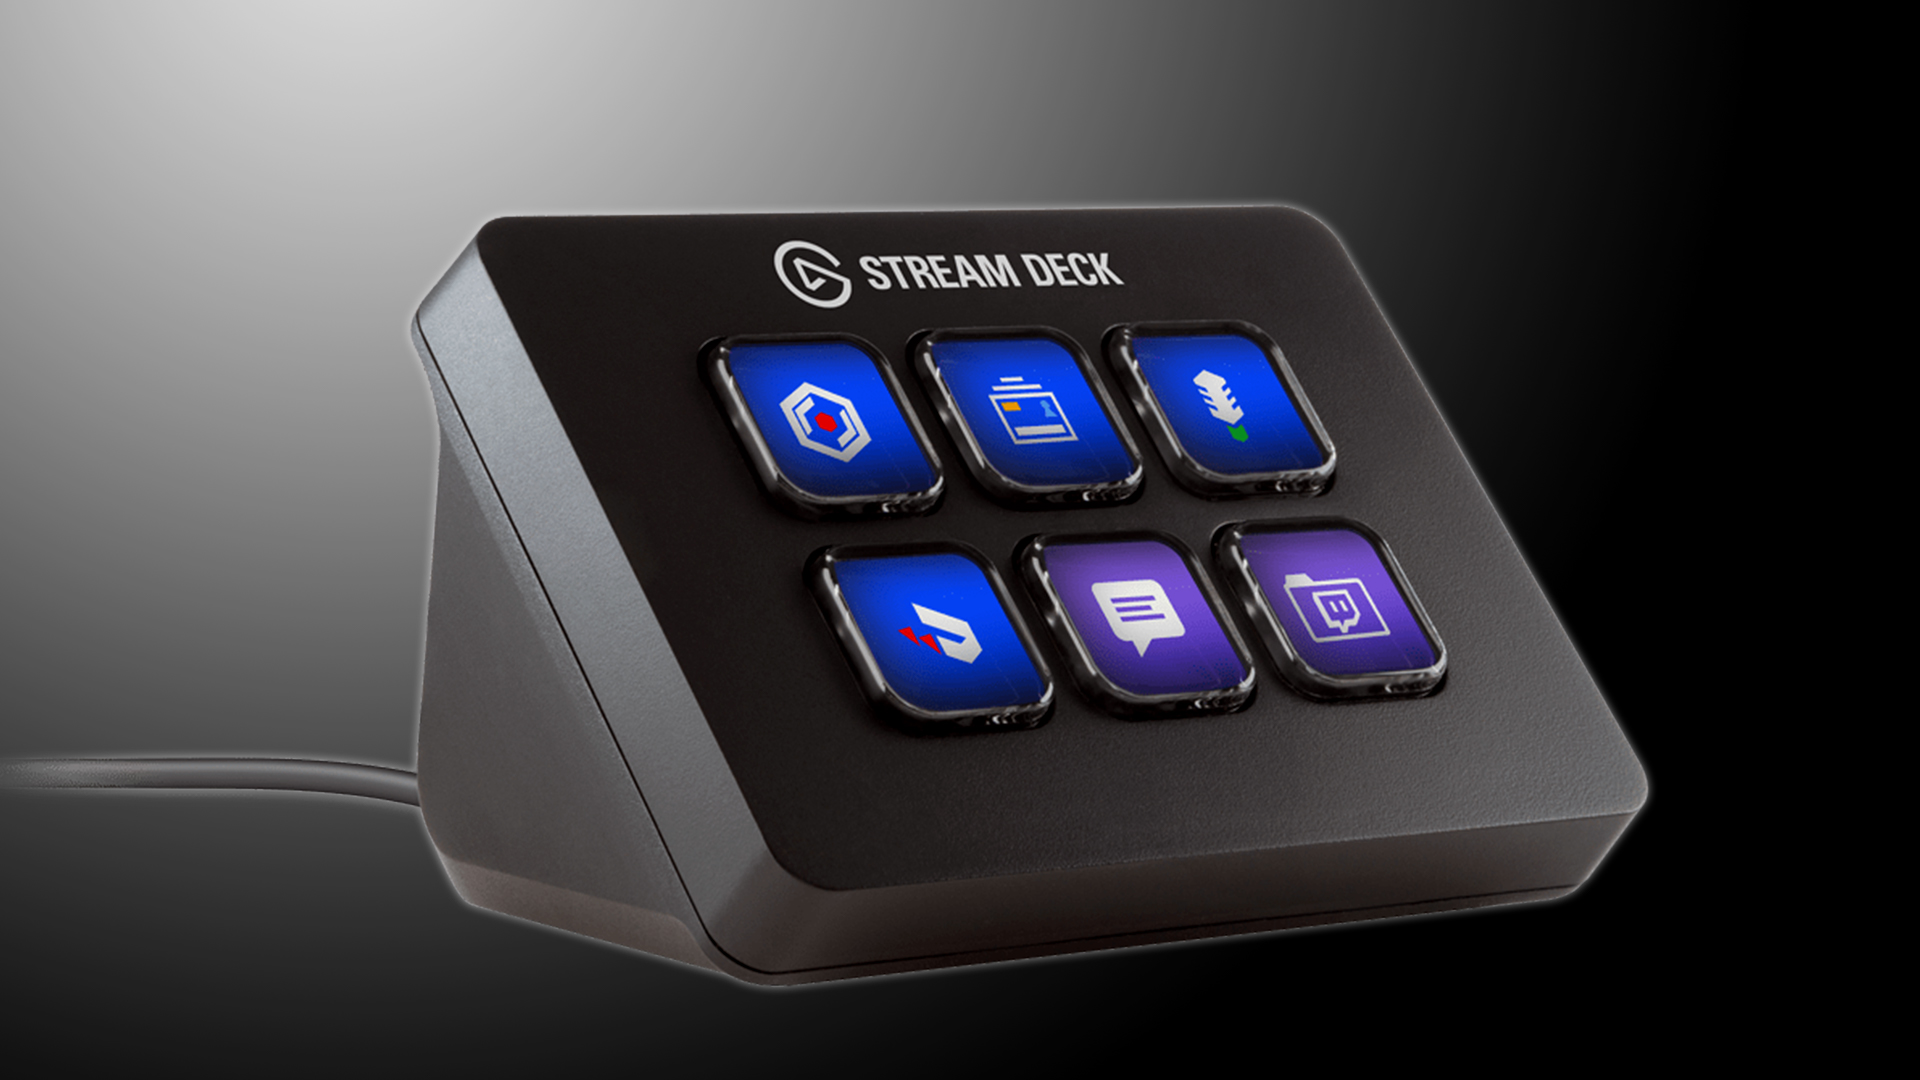 ElgatoがStream Deck Miniを発表 ー 6個のプログラマブルボタンを持つ編集サポートパネル